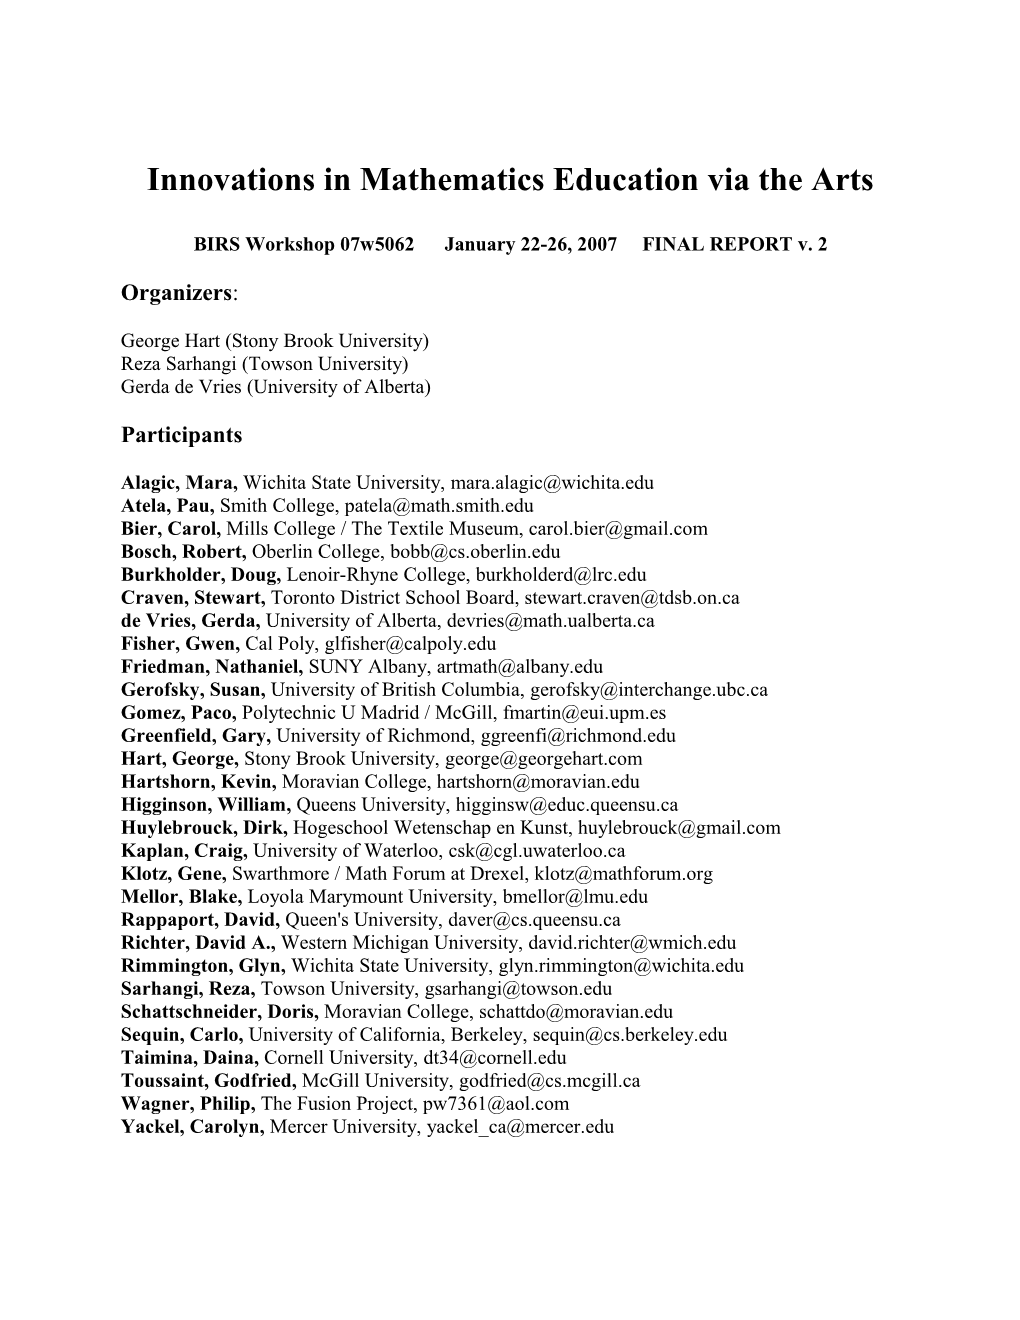 Innovations in Mathematics Education Via the Arts